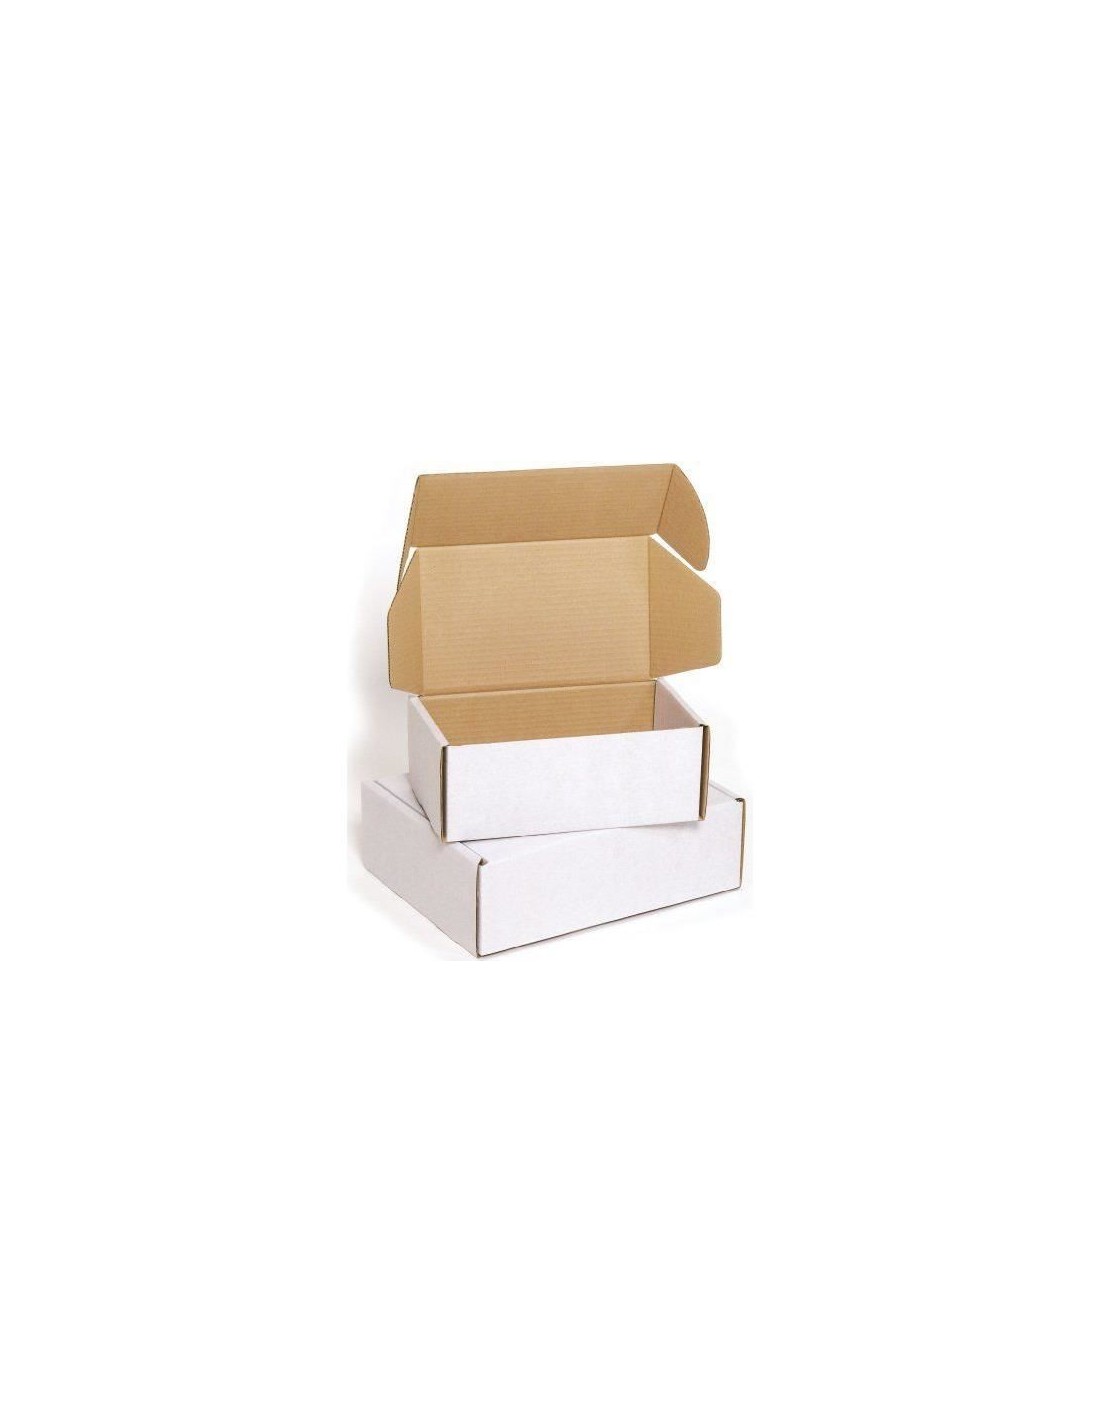 Boîte postale carton blanche - Boite carton blanche